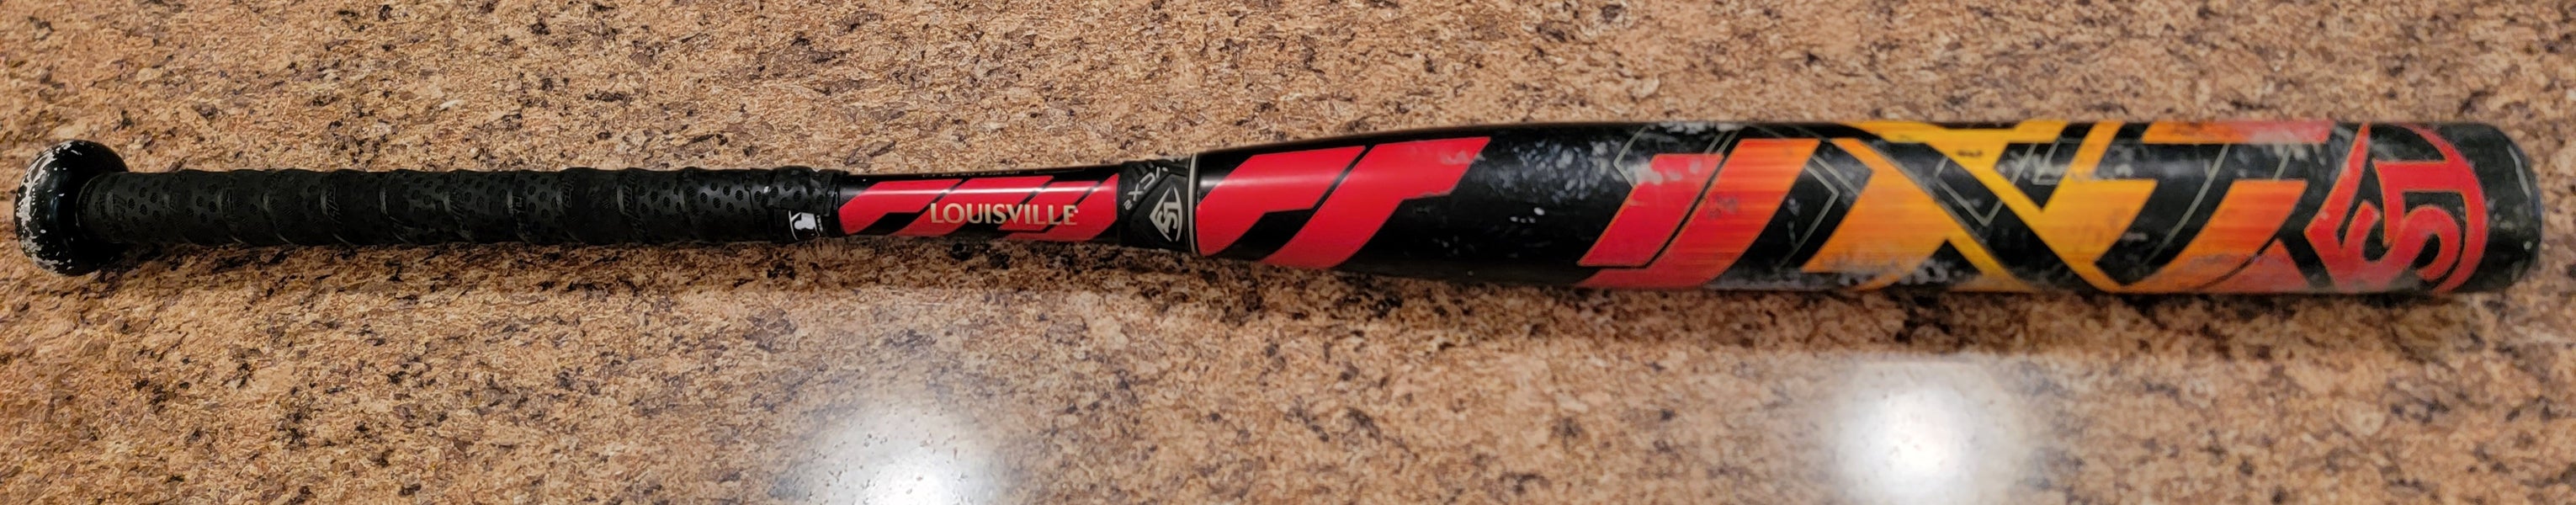 Louisville Slugger LXT (-9) Fastpitch Softball Bat - 2022 Model